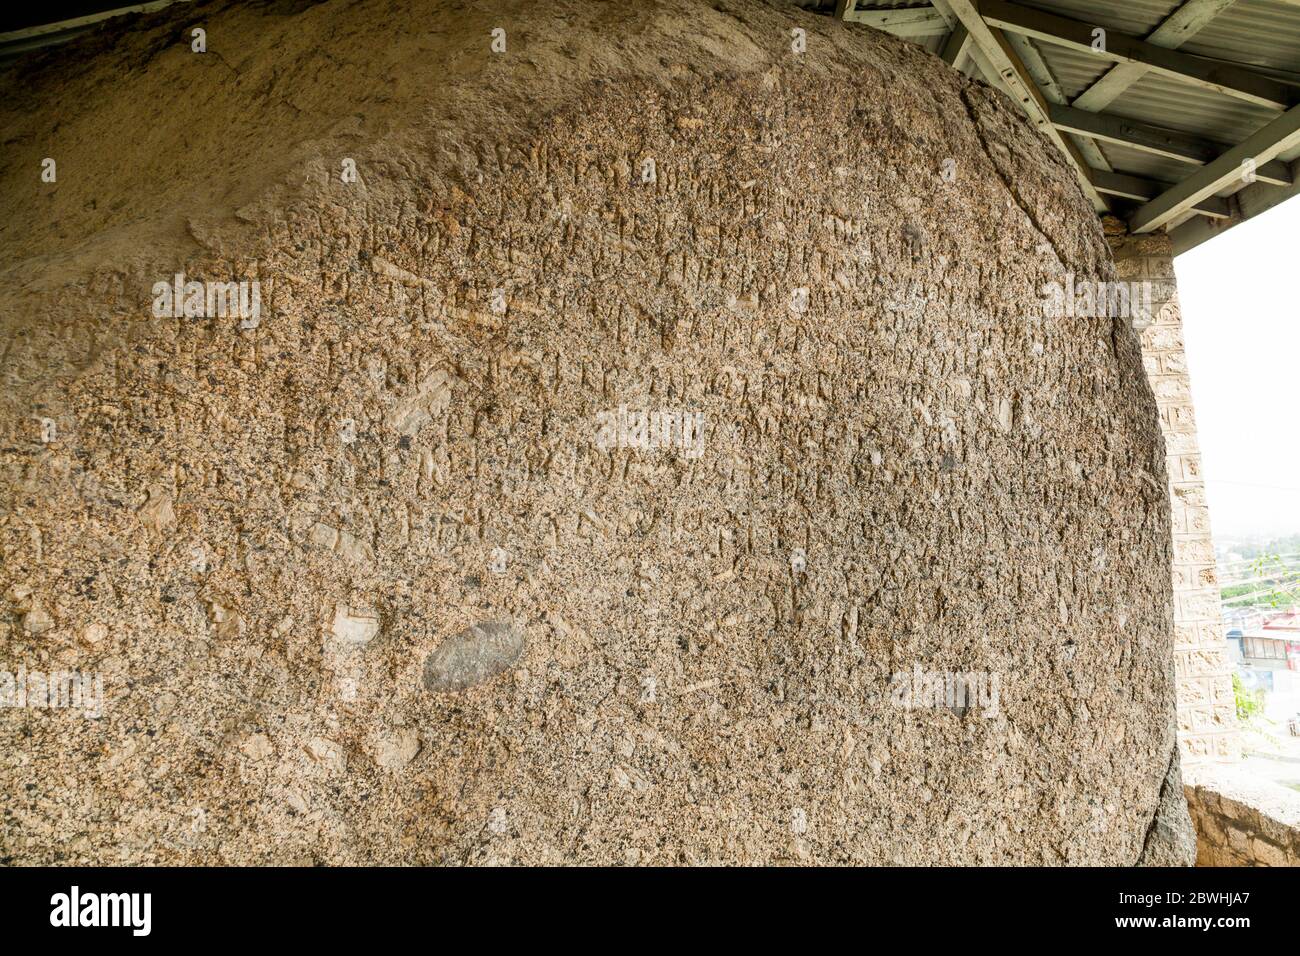 Ashoka Rocks, Ashoka's Rock, Mansehra Rock Edicts, 3rd century BCE, Manshera, Khyber Pakhtunkhwa Province, Pakistan, South Asia, Asia Stock Photo